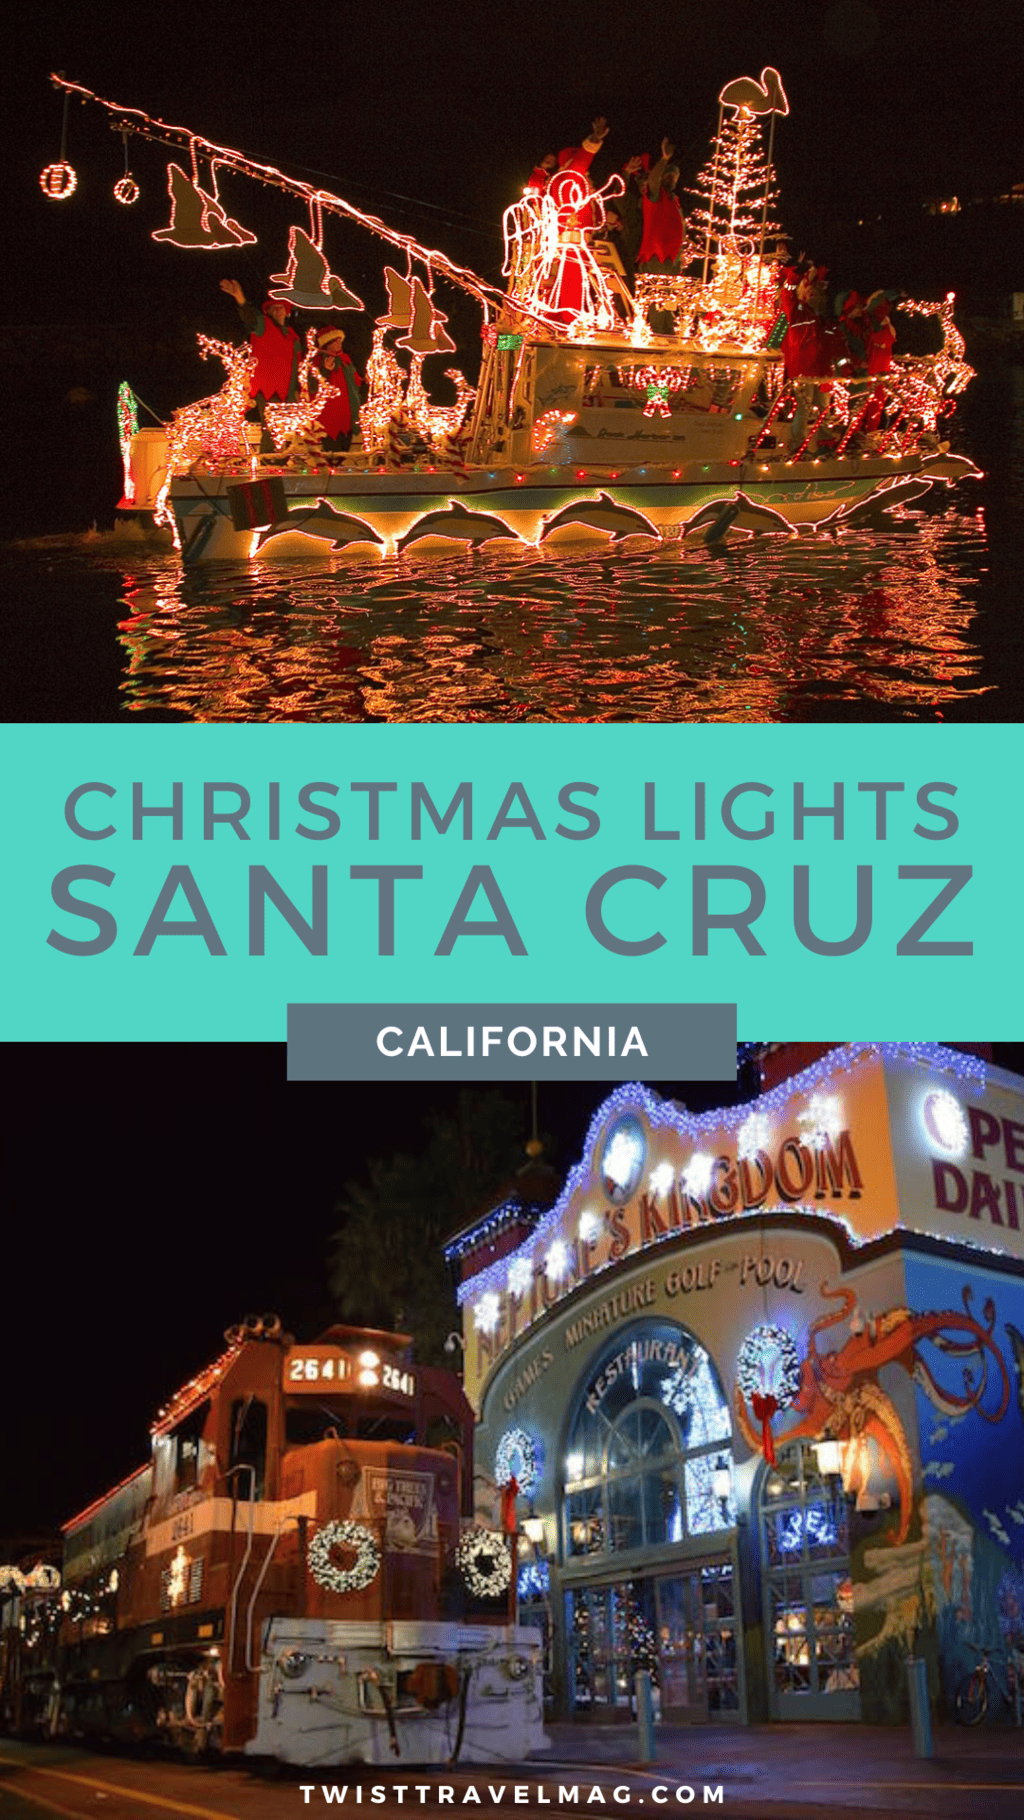 Santa Cruz Christmas Lights in California